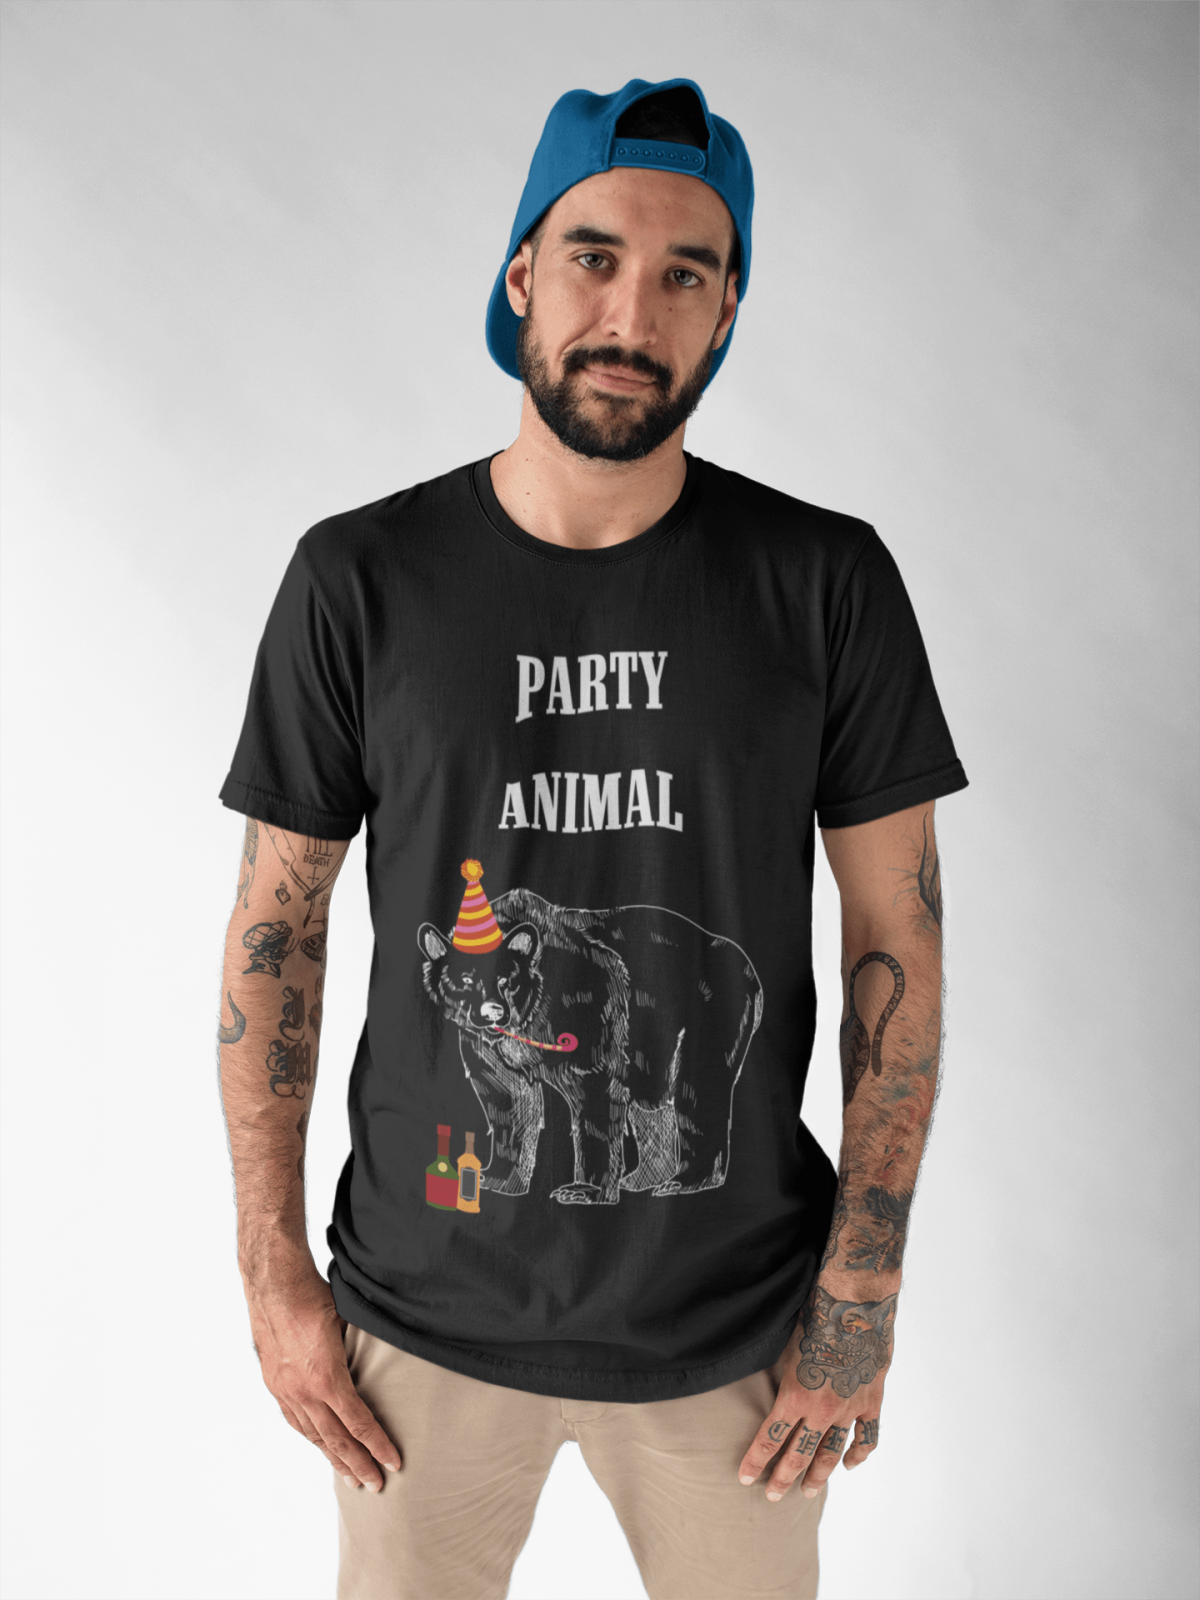 tkrekls “Party Animal”